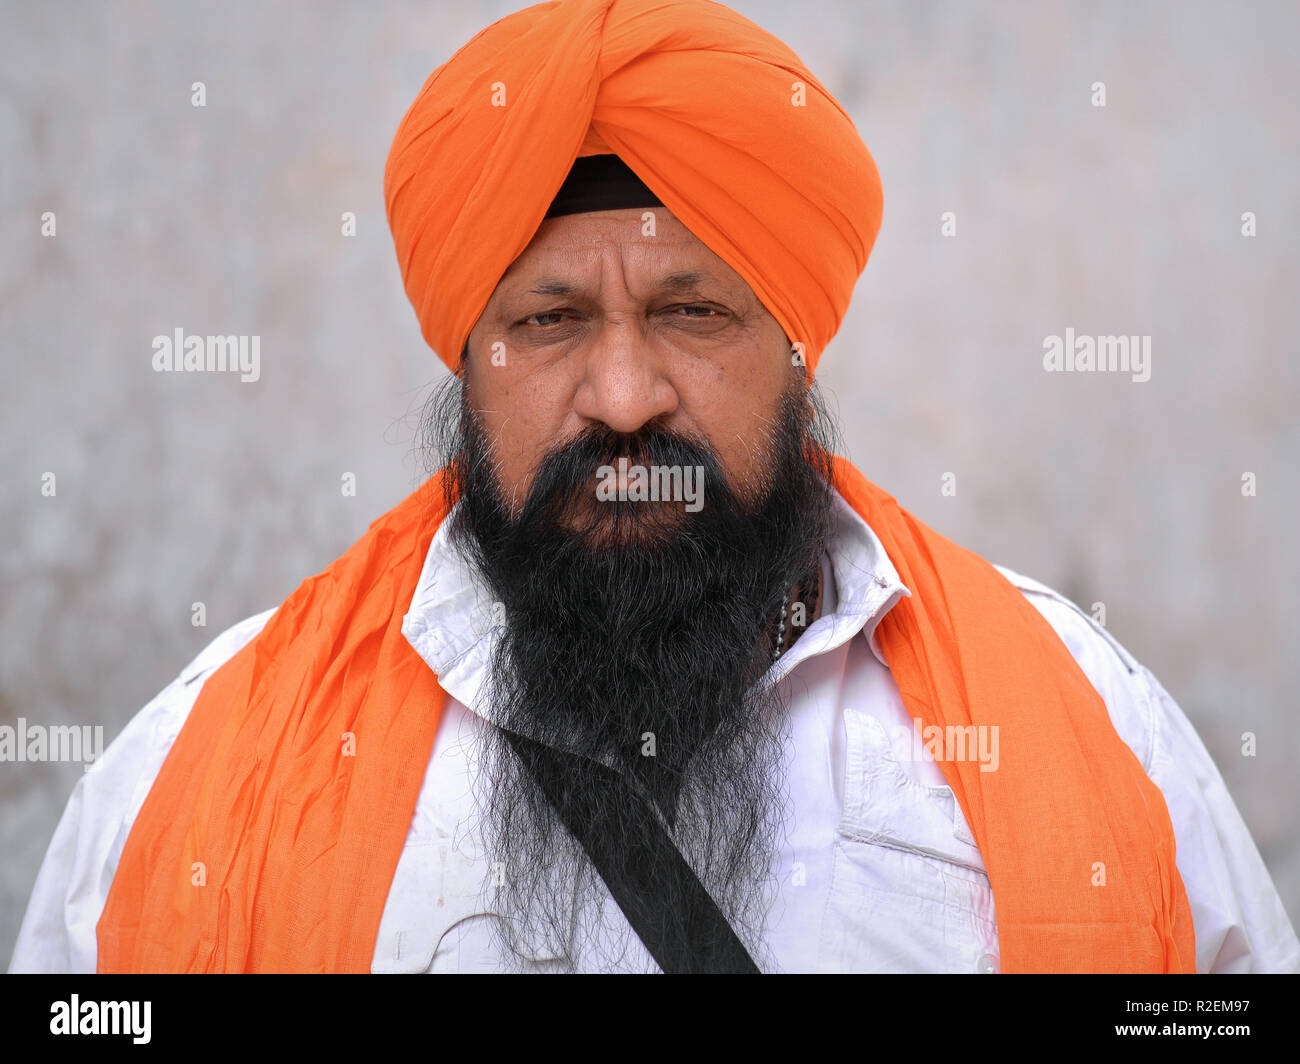 Big, elderly Indian Sikh man with orange turban (dastar) poses for the camera. Stock Photo